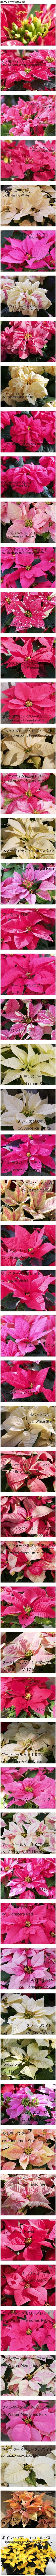 FireShot Screen Capture #451 - ポインセチアはどんな植物？Weblio辞書 - www_weblio_jp-min